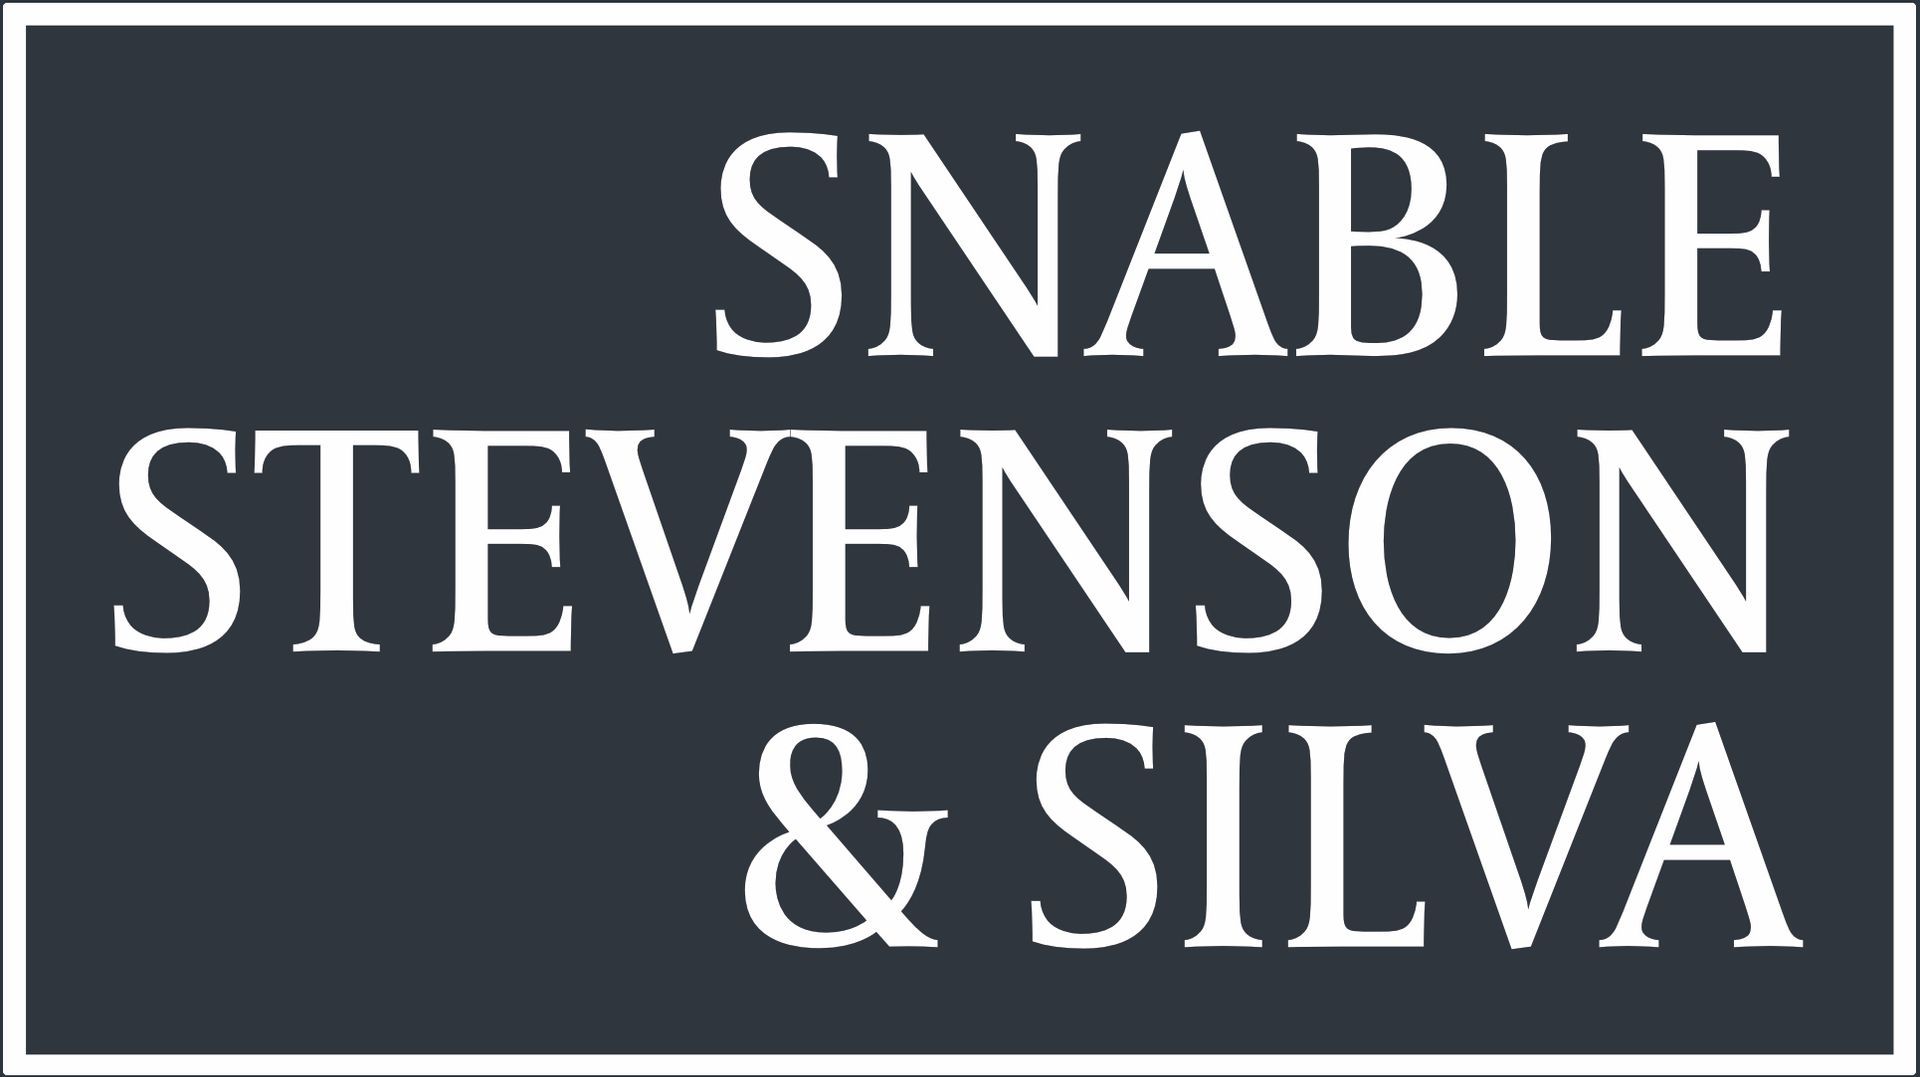 Injury Law Firm Alabama - Snable Stevenson & Silva